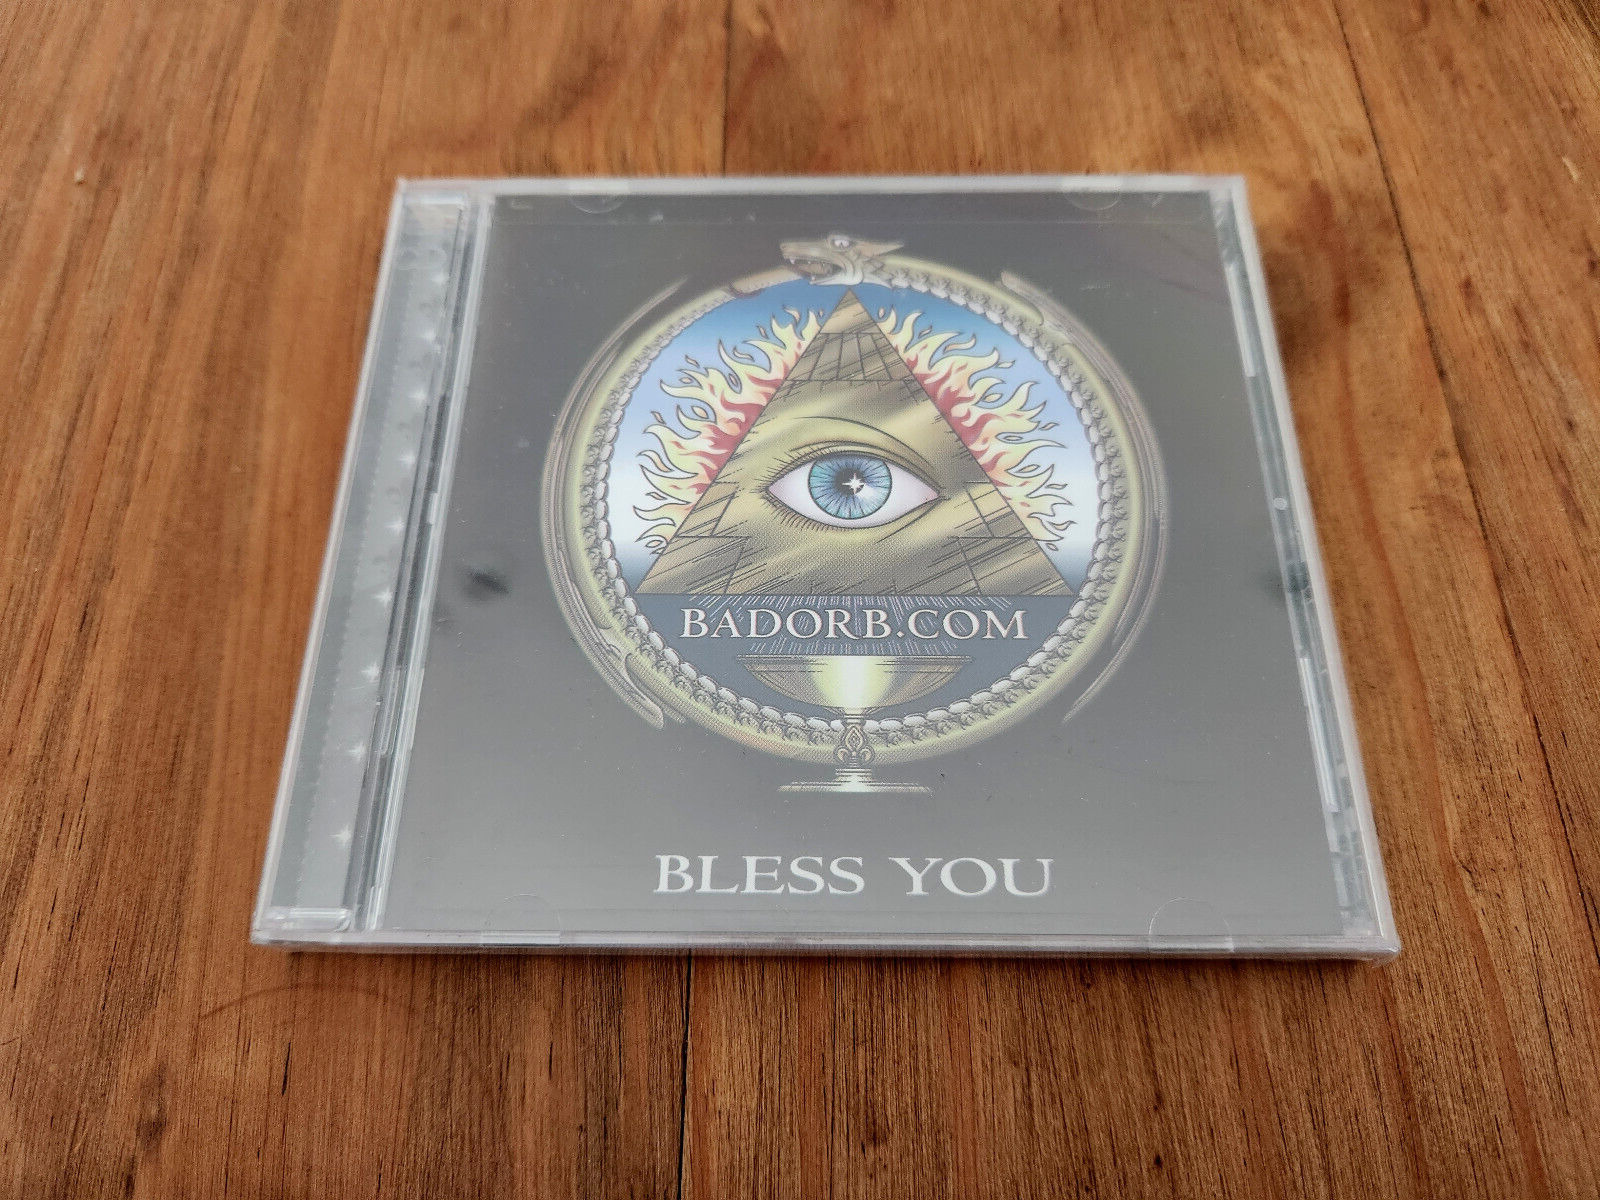 Badorb.com: Bless You by Various Artists (CD, Jul-2002, 2 Discs, Shanachie)